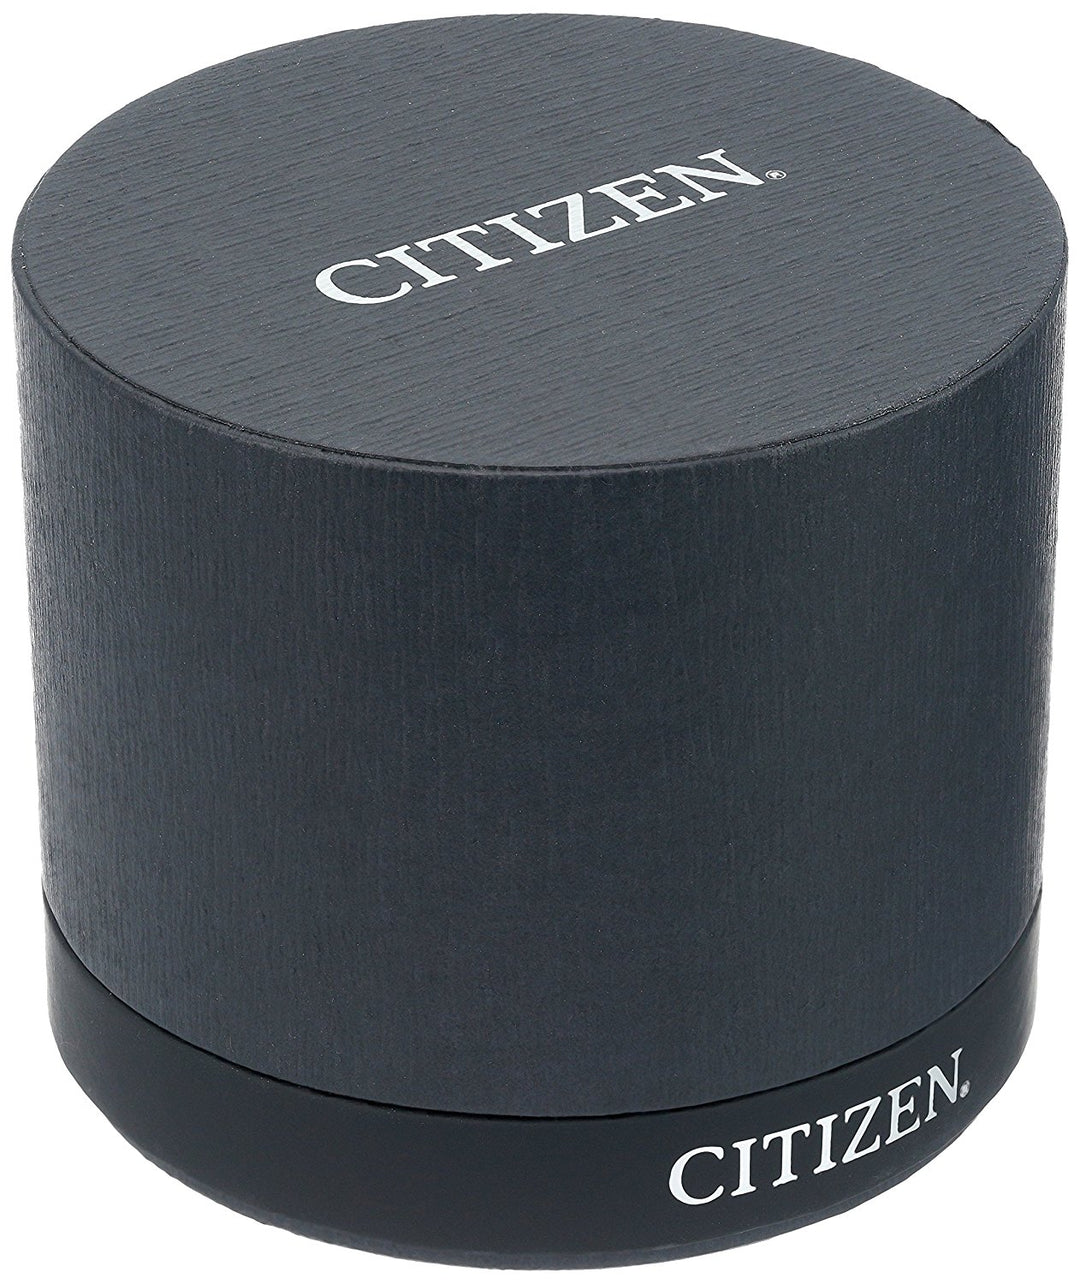 citizen watch model  BI5034-51E - Watch Universe Int 